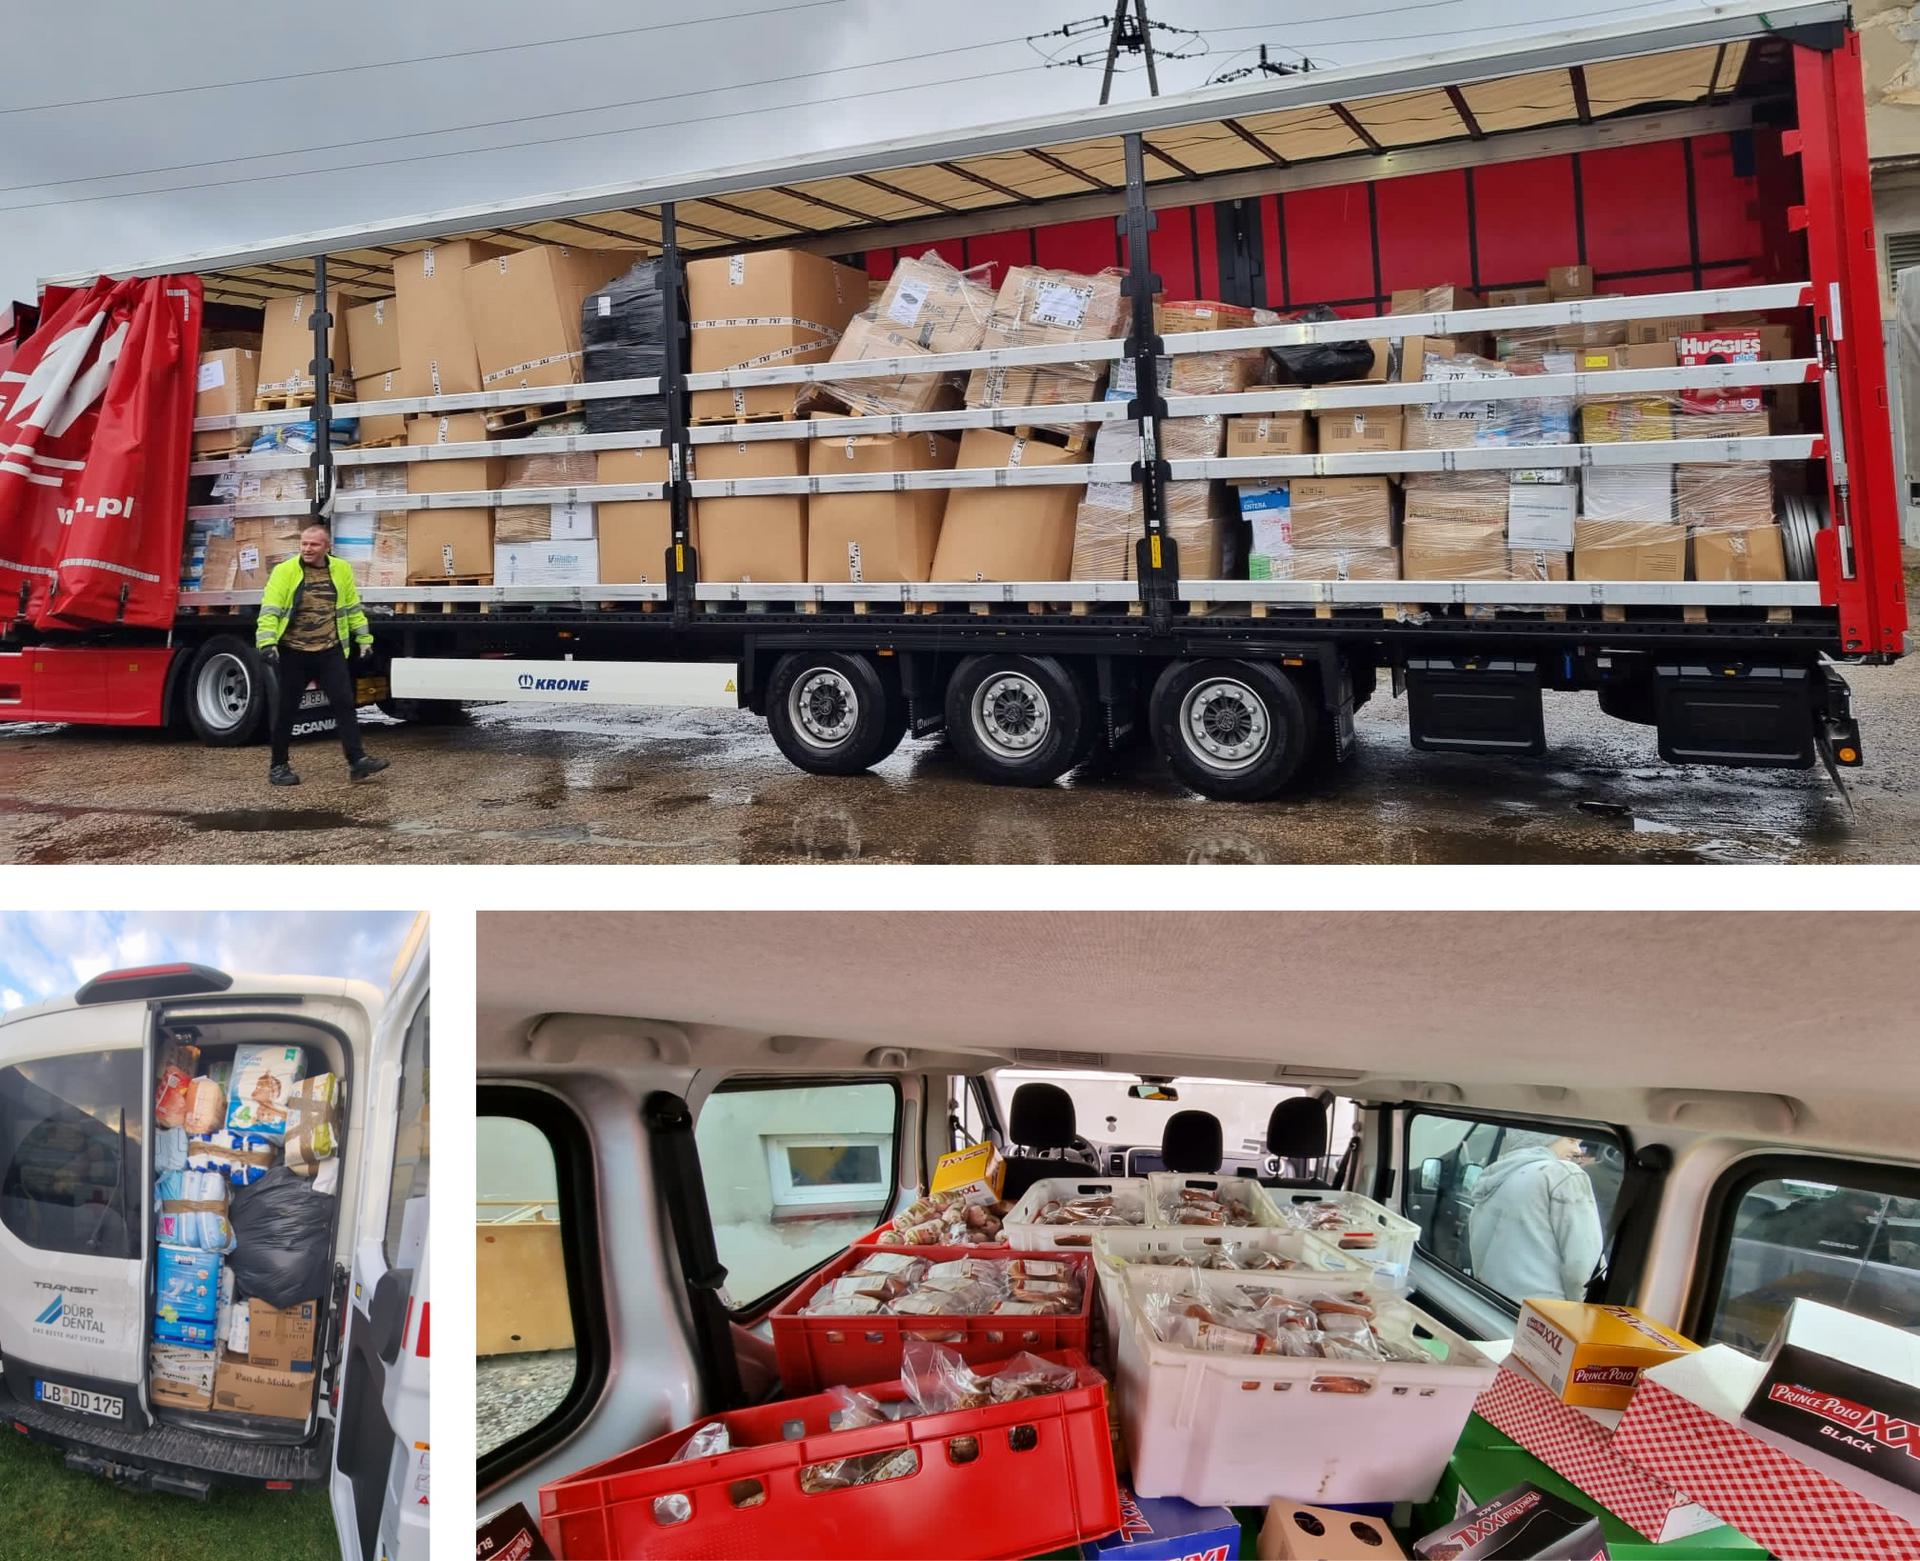 Trucks and vans full of humanitarian aid for Ukraine.